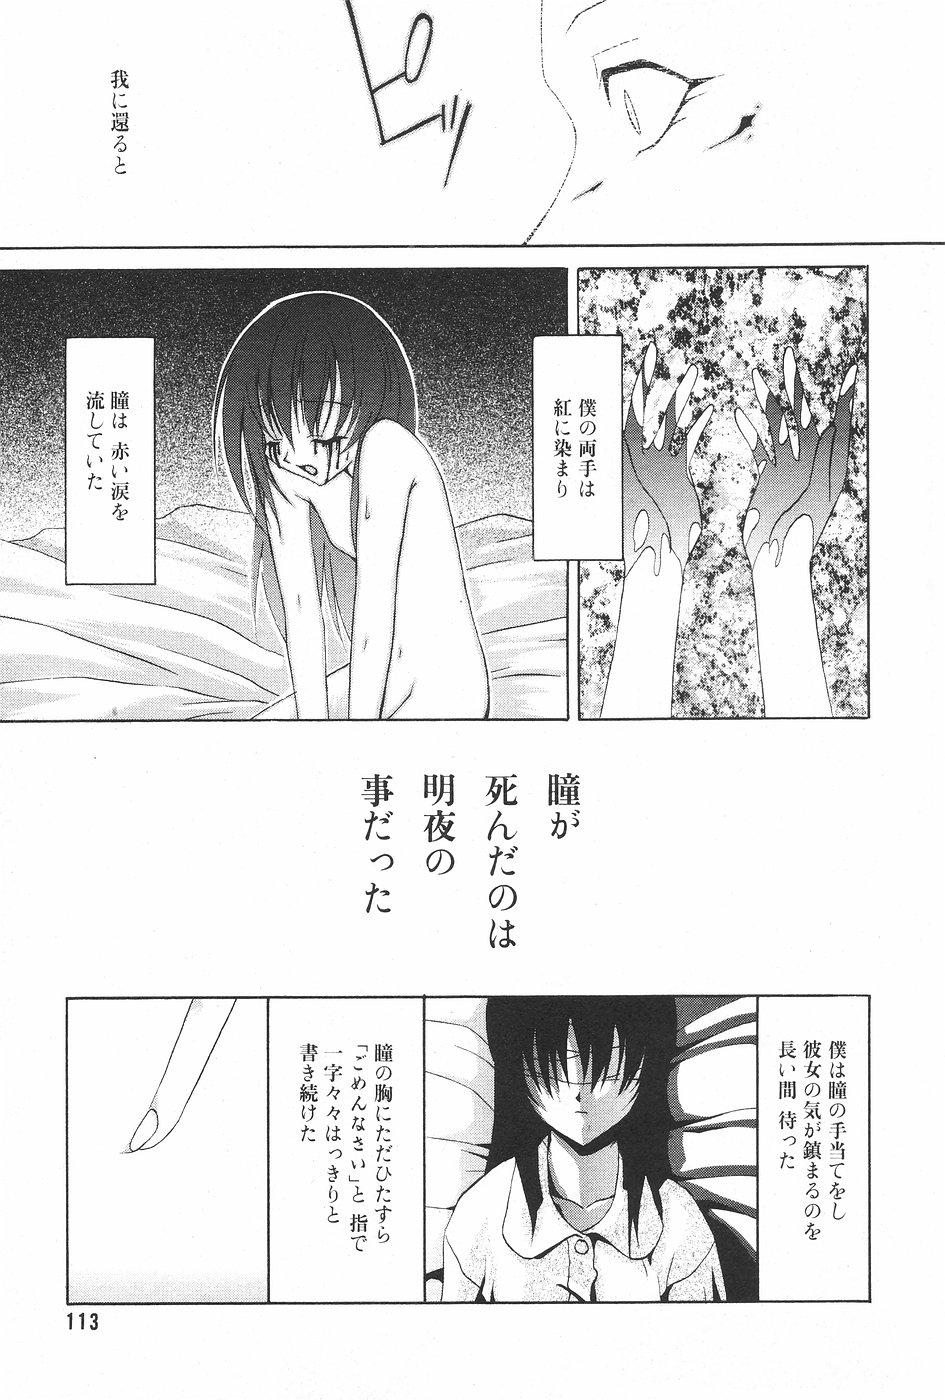 Manga Hotmilk 1997-05 112